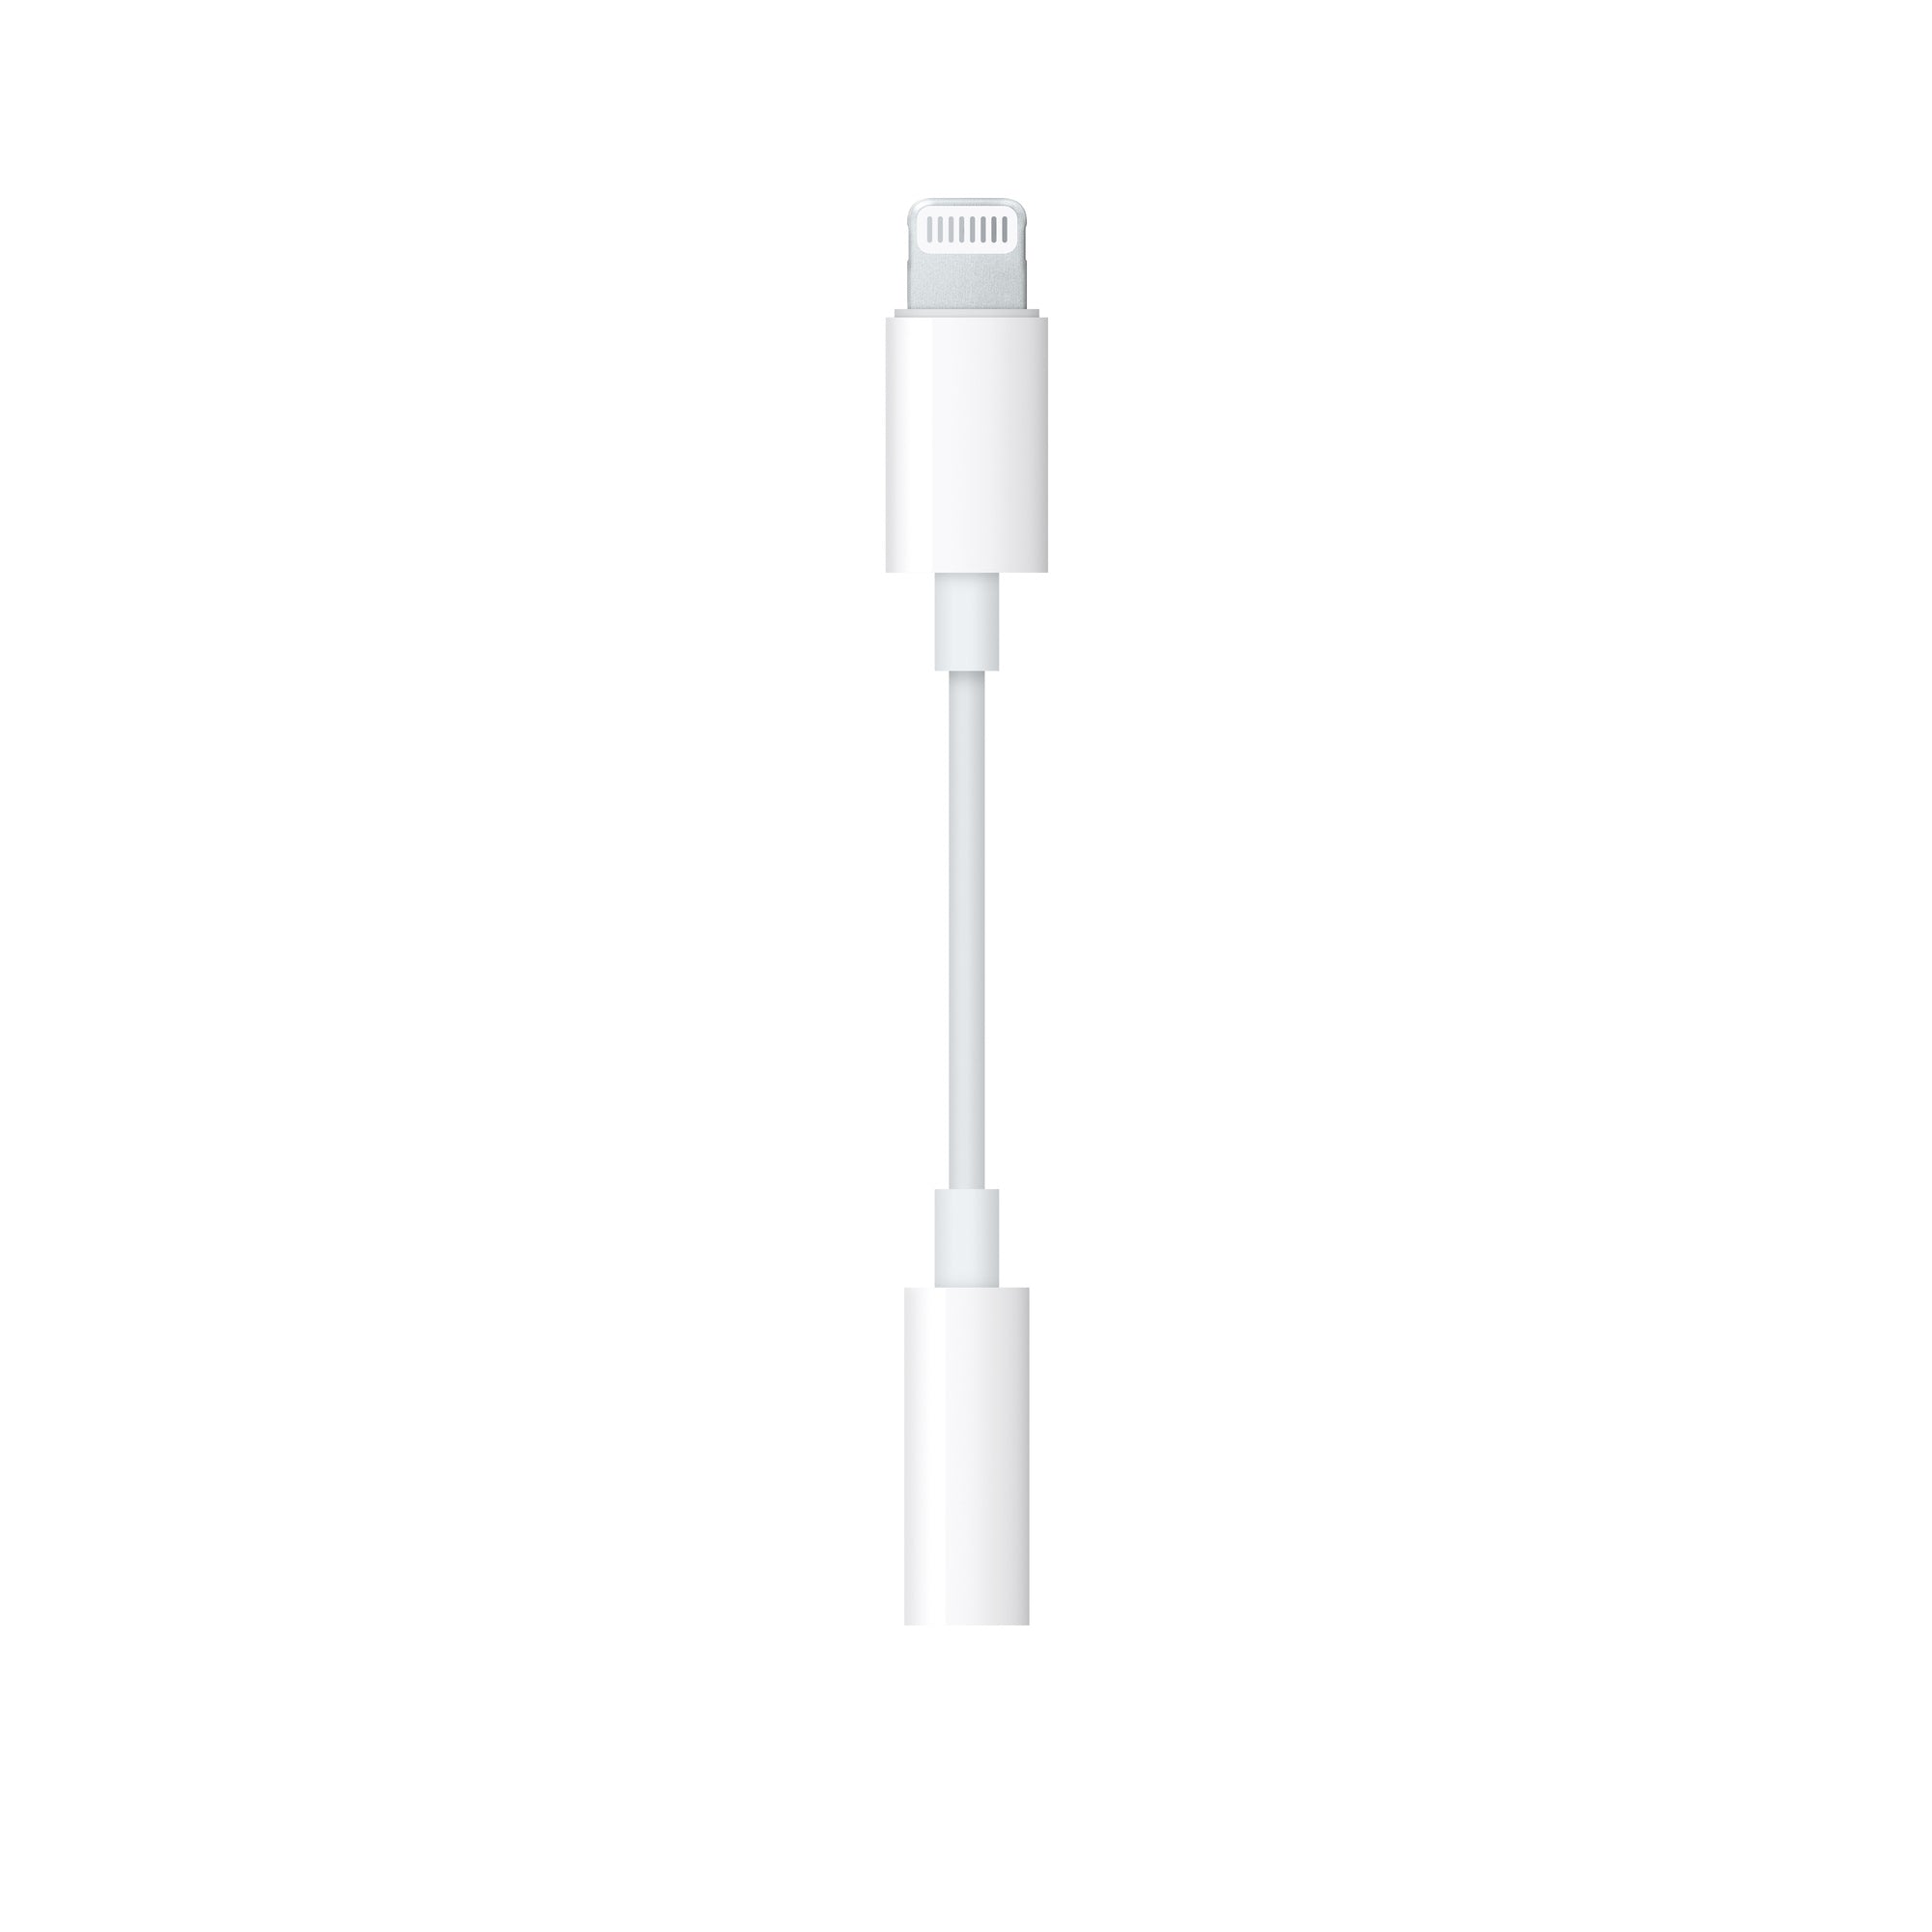 Apple iPhone X Headphone Jack Connector (Lightning to 3.5mm)